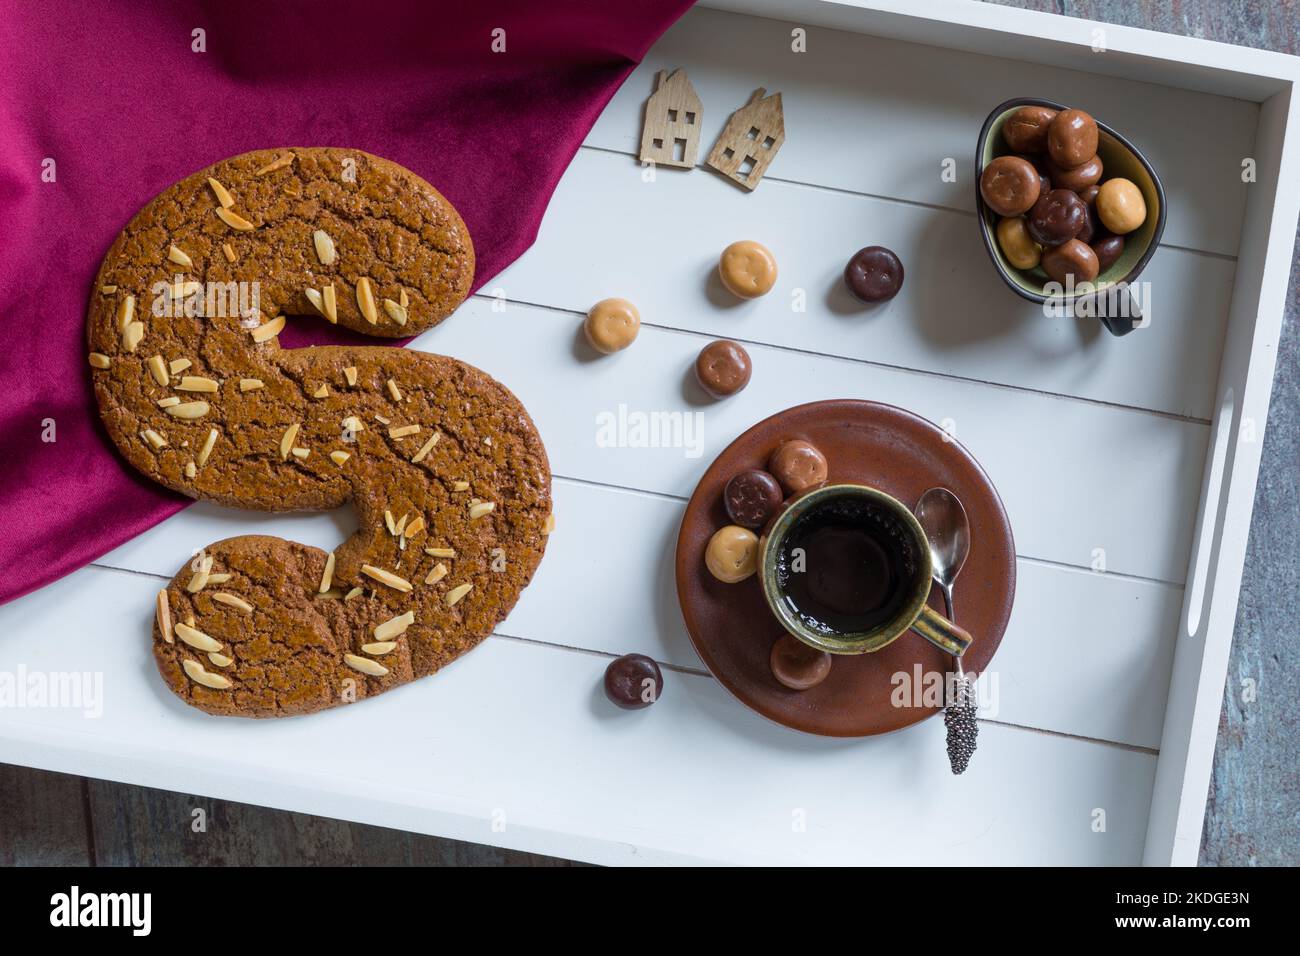 A cup of coffee and spiced bisquit called speculaas on a tray to celebrate 'het heerlijk avondje van Sinterklaas', the traditional Saint Nicolas eveni Stock Photo